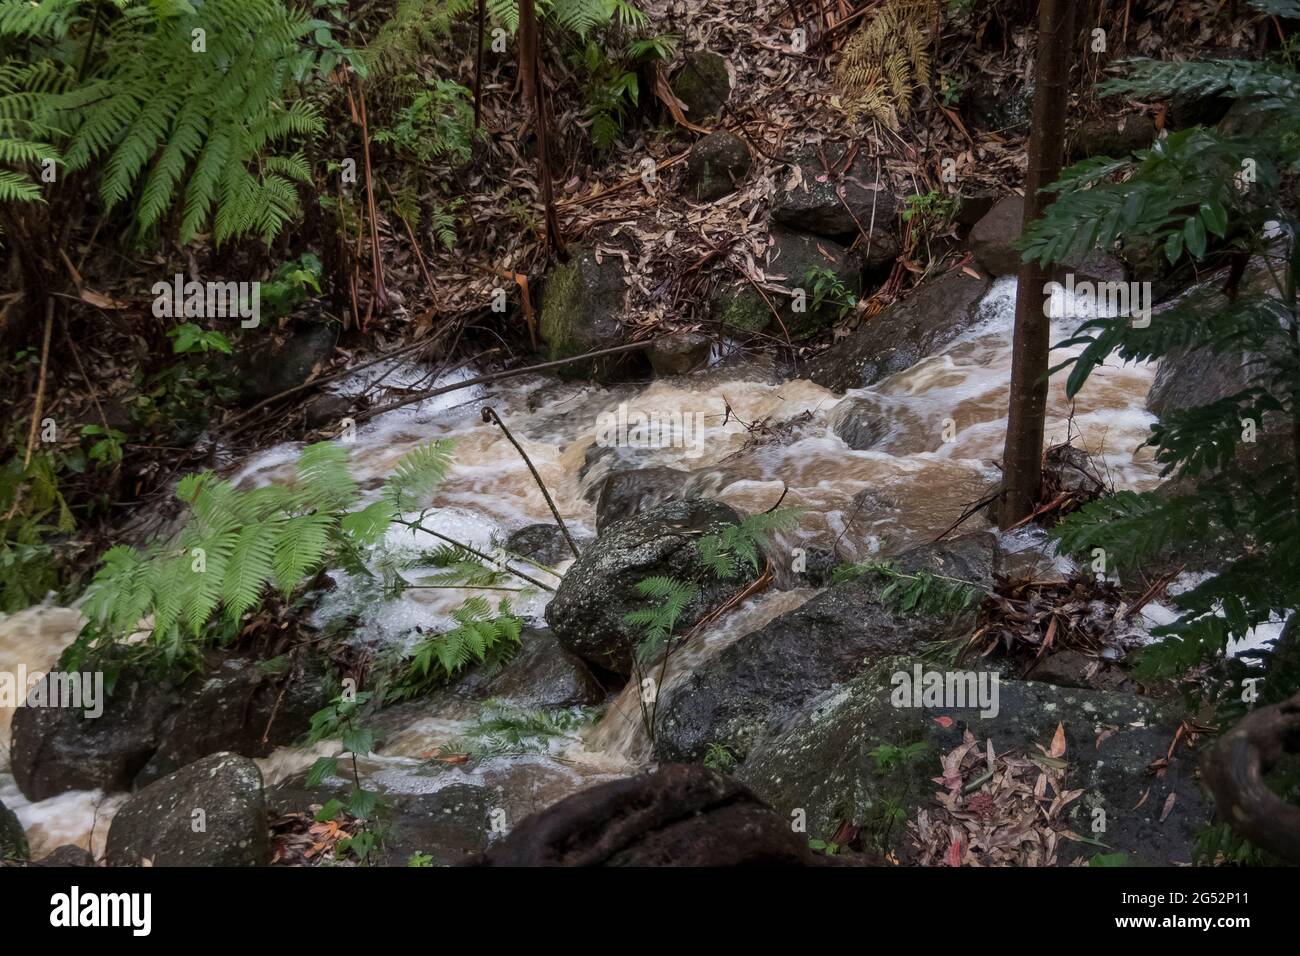 Fast-flowing creek, after summer rain, in subtropical rainforest on Tamborine Mountain, Queensland, Australia. Ferns and rocks along banks. Stock Photo